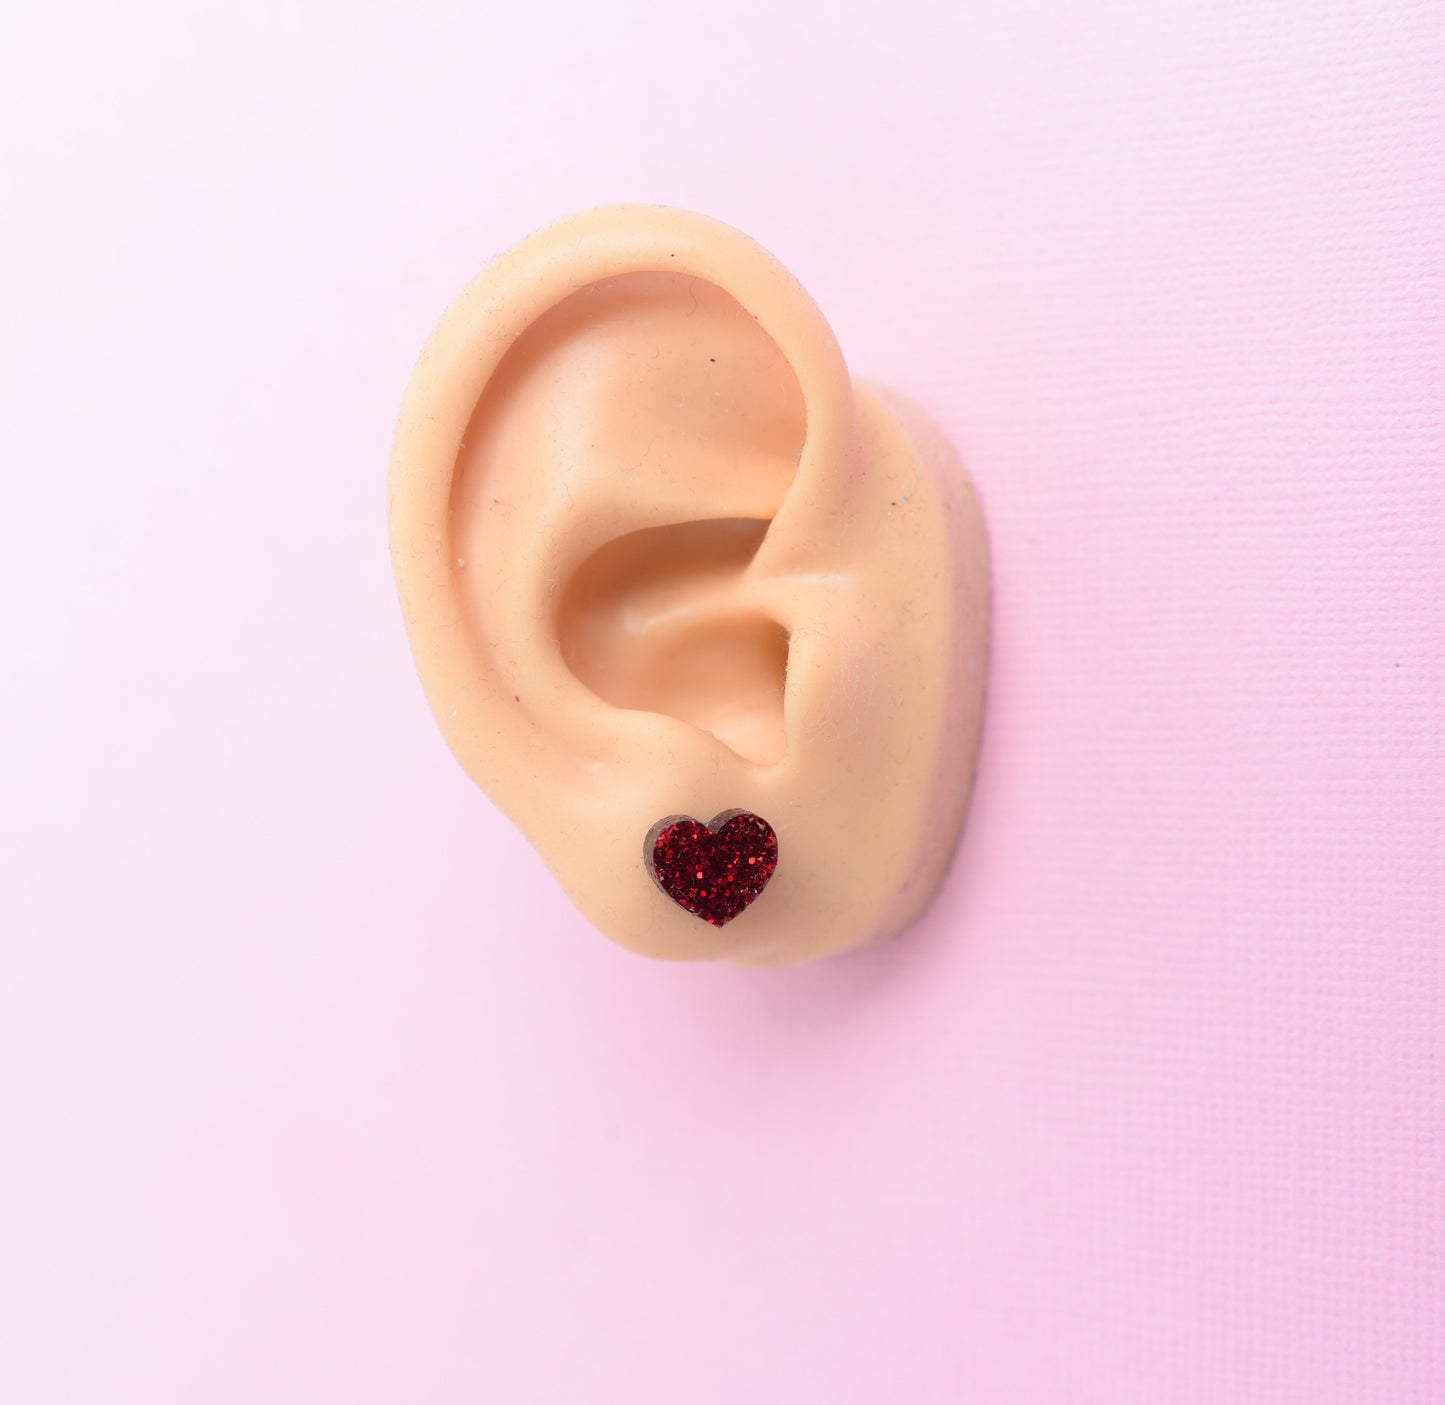 Glitter Acrylic Heart Earrings- Pink or Red